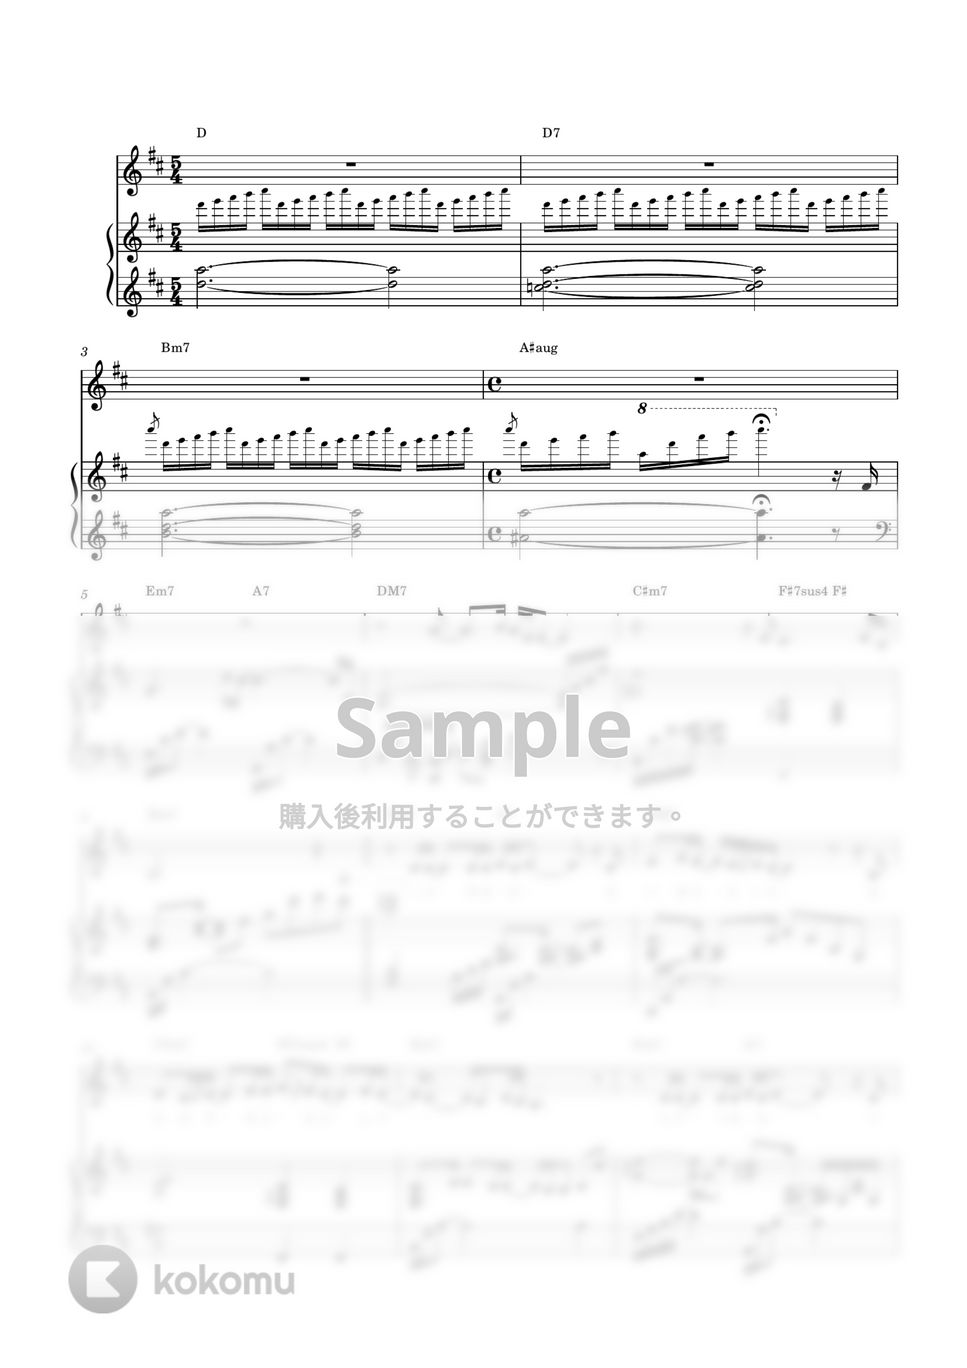 MISIA - SNOW SONG(Live Ver.) (ピアノ弾き語り / 中上級 / 歌詞・コードあり) by ena